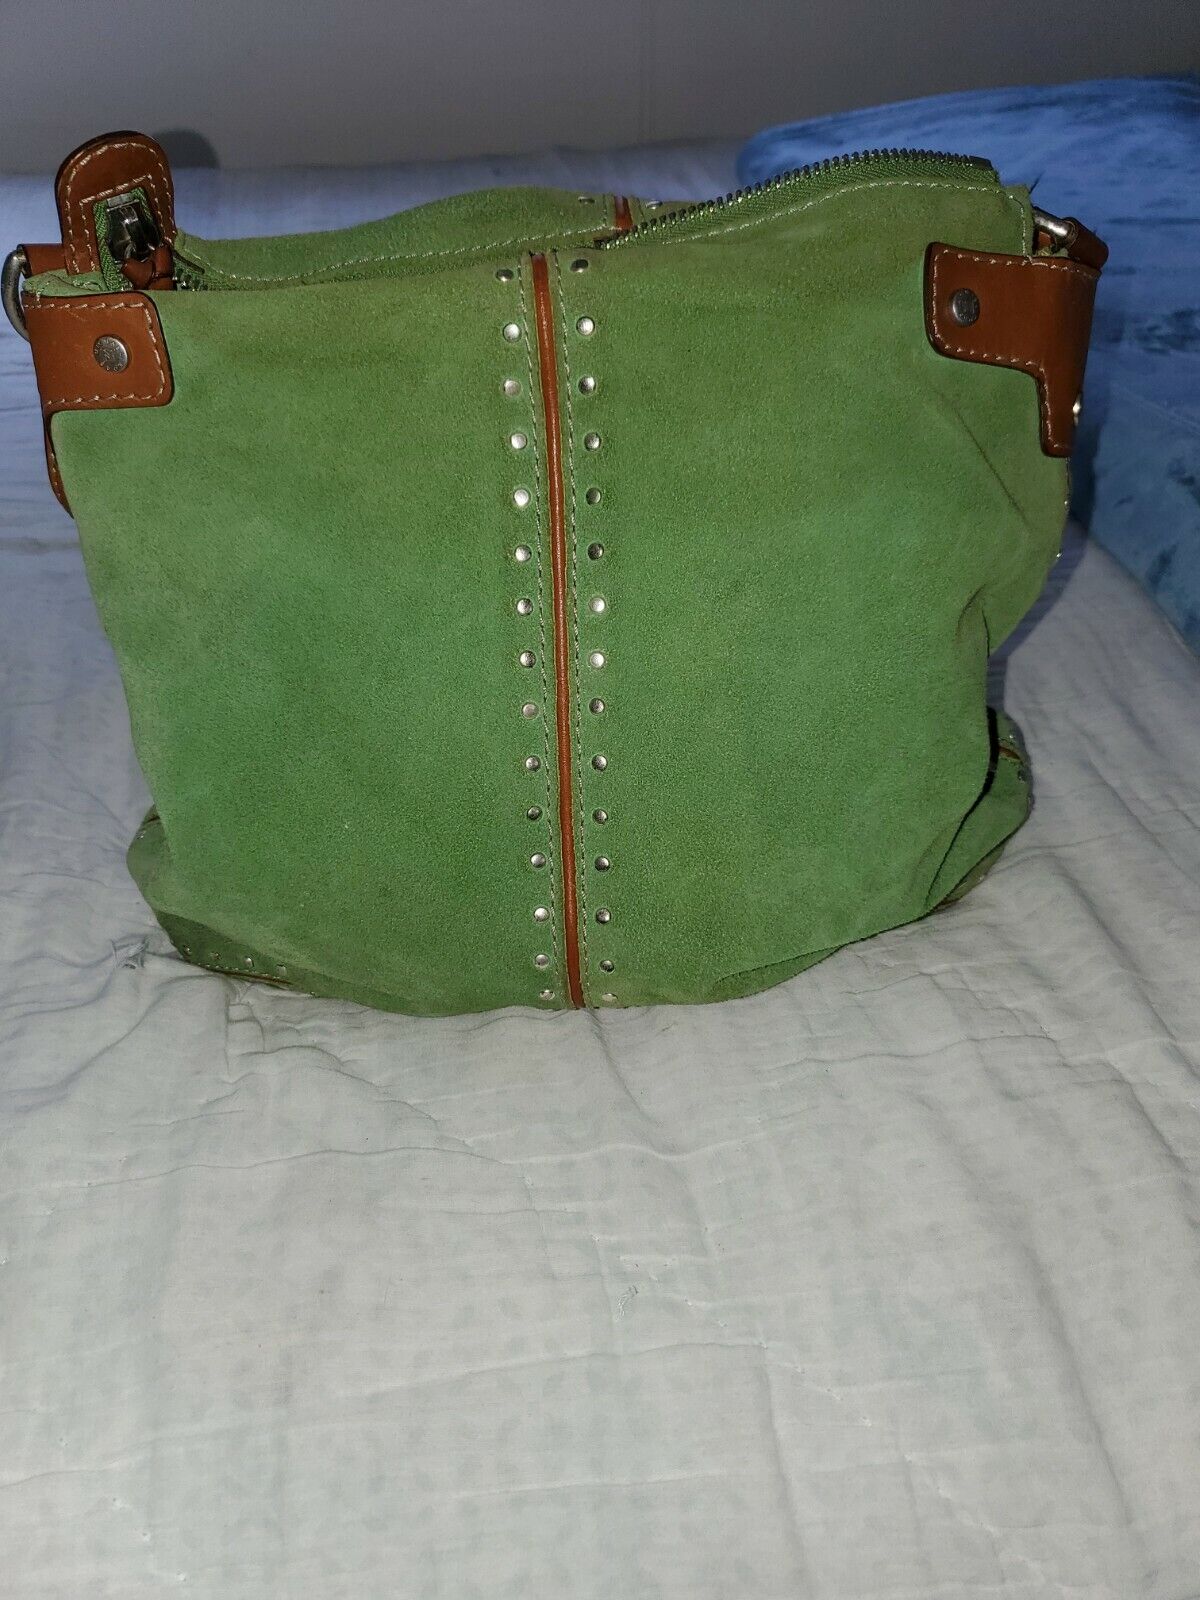 Michael Kors Green Suede Handbag | eBay